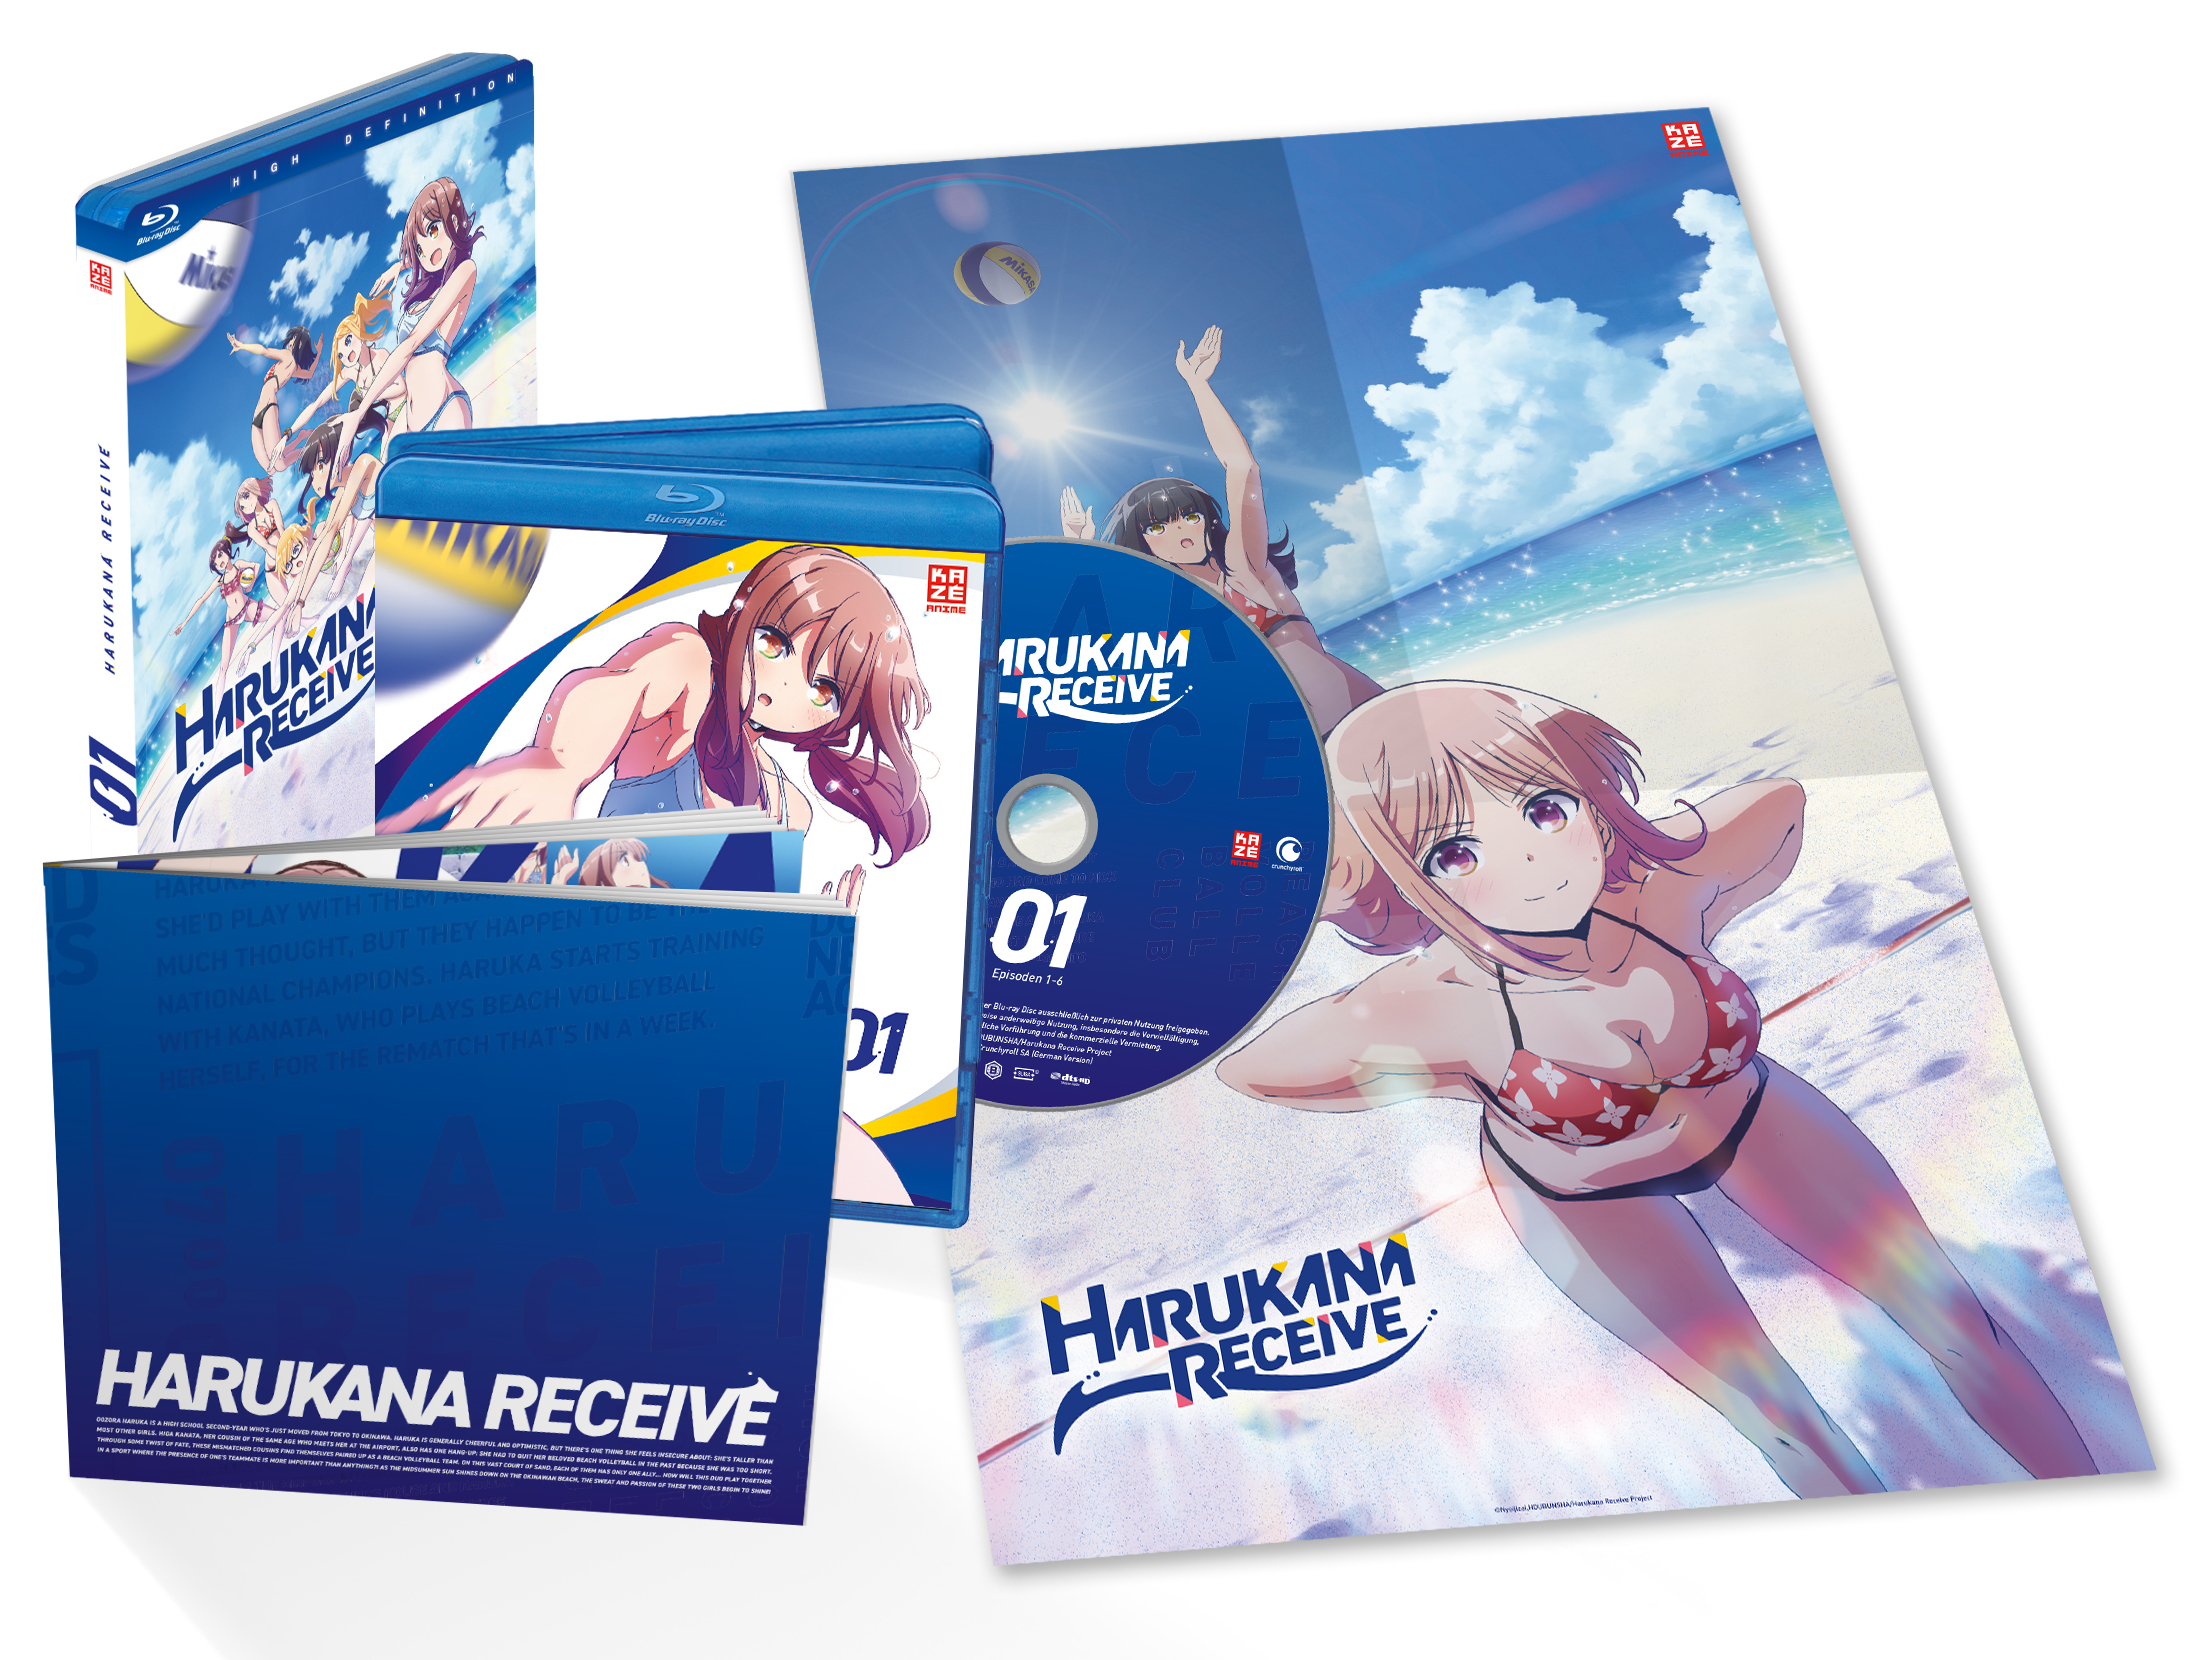 Harukana Receive: The Complete Series (Blu-ray)